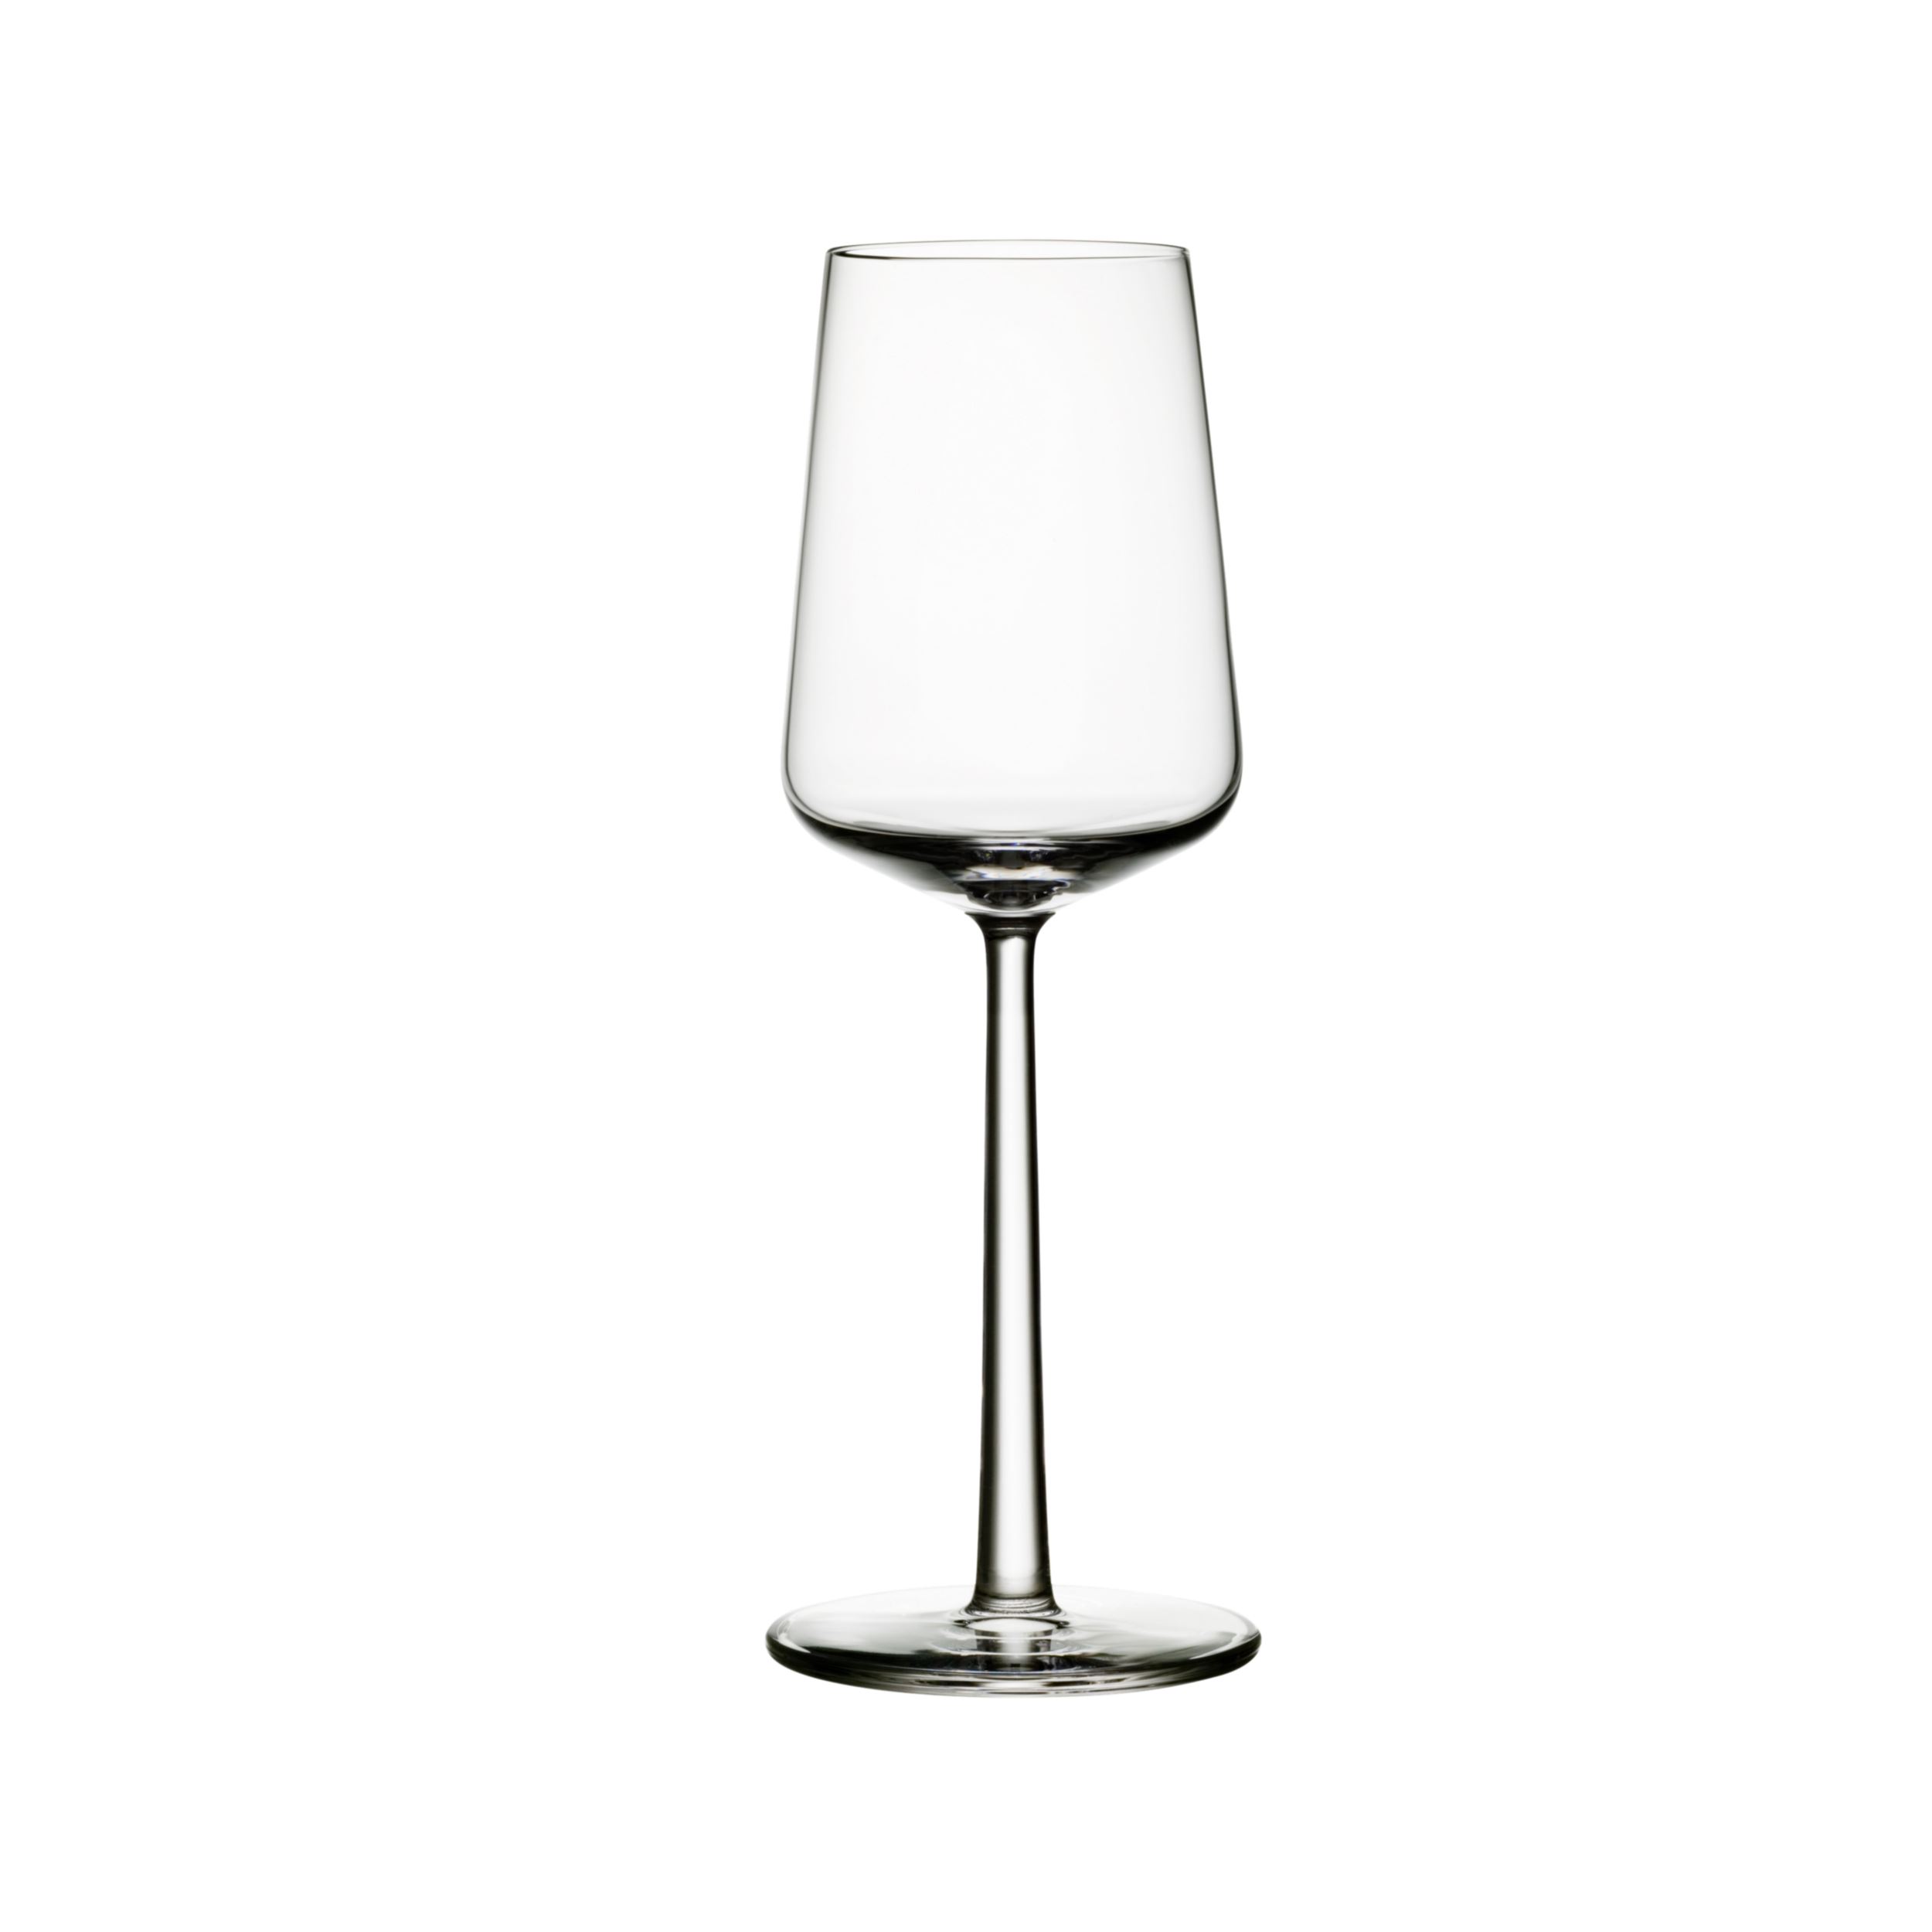 Iittala White Wine Glasses Essence 2 pieces 